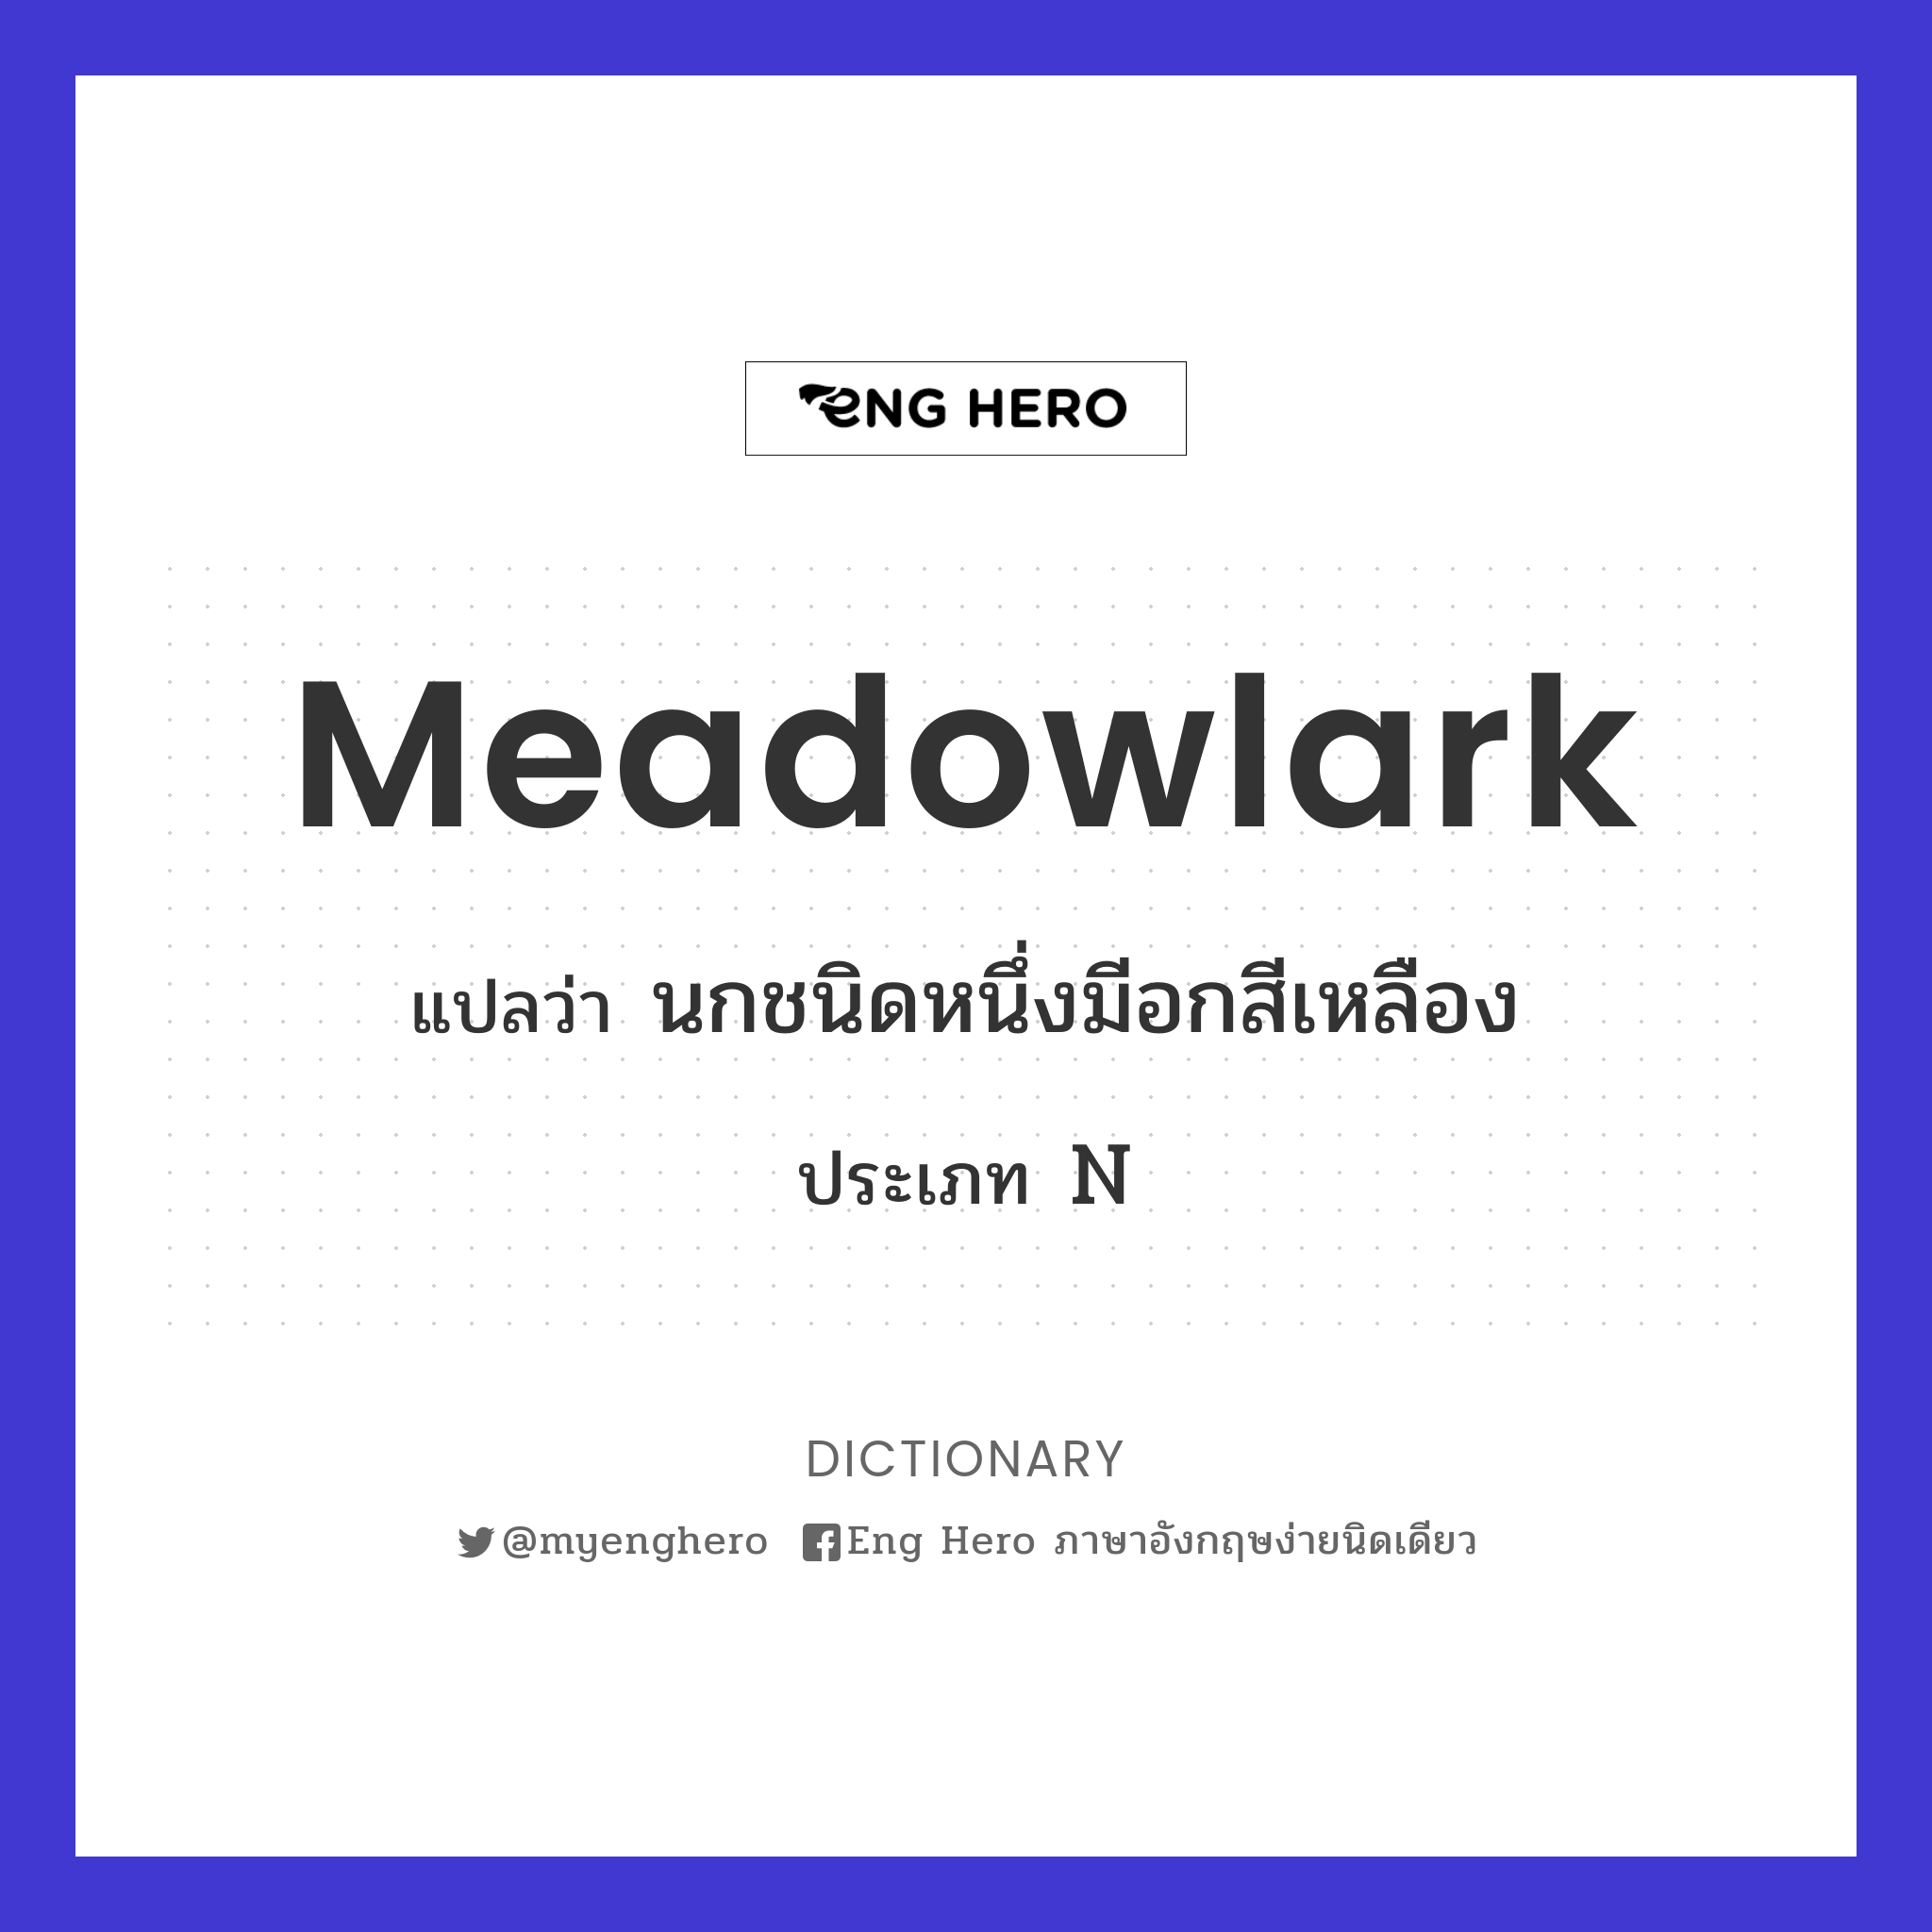 meadowlark